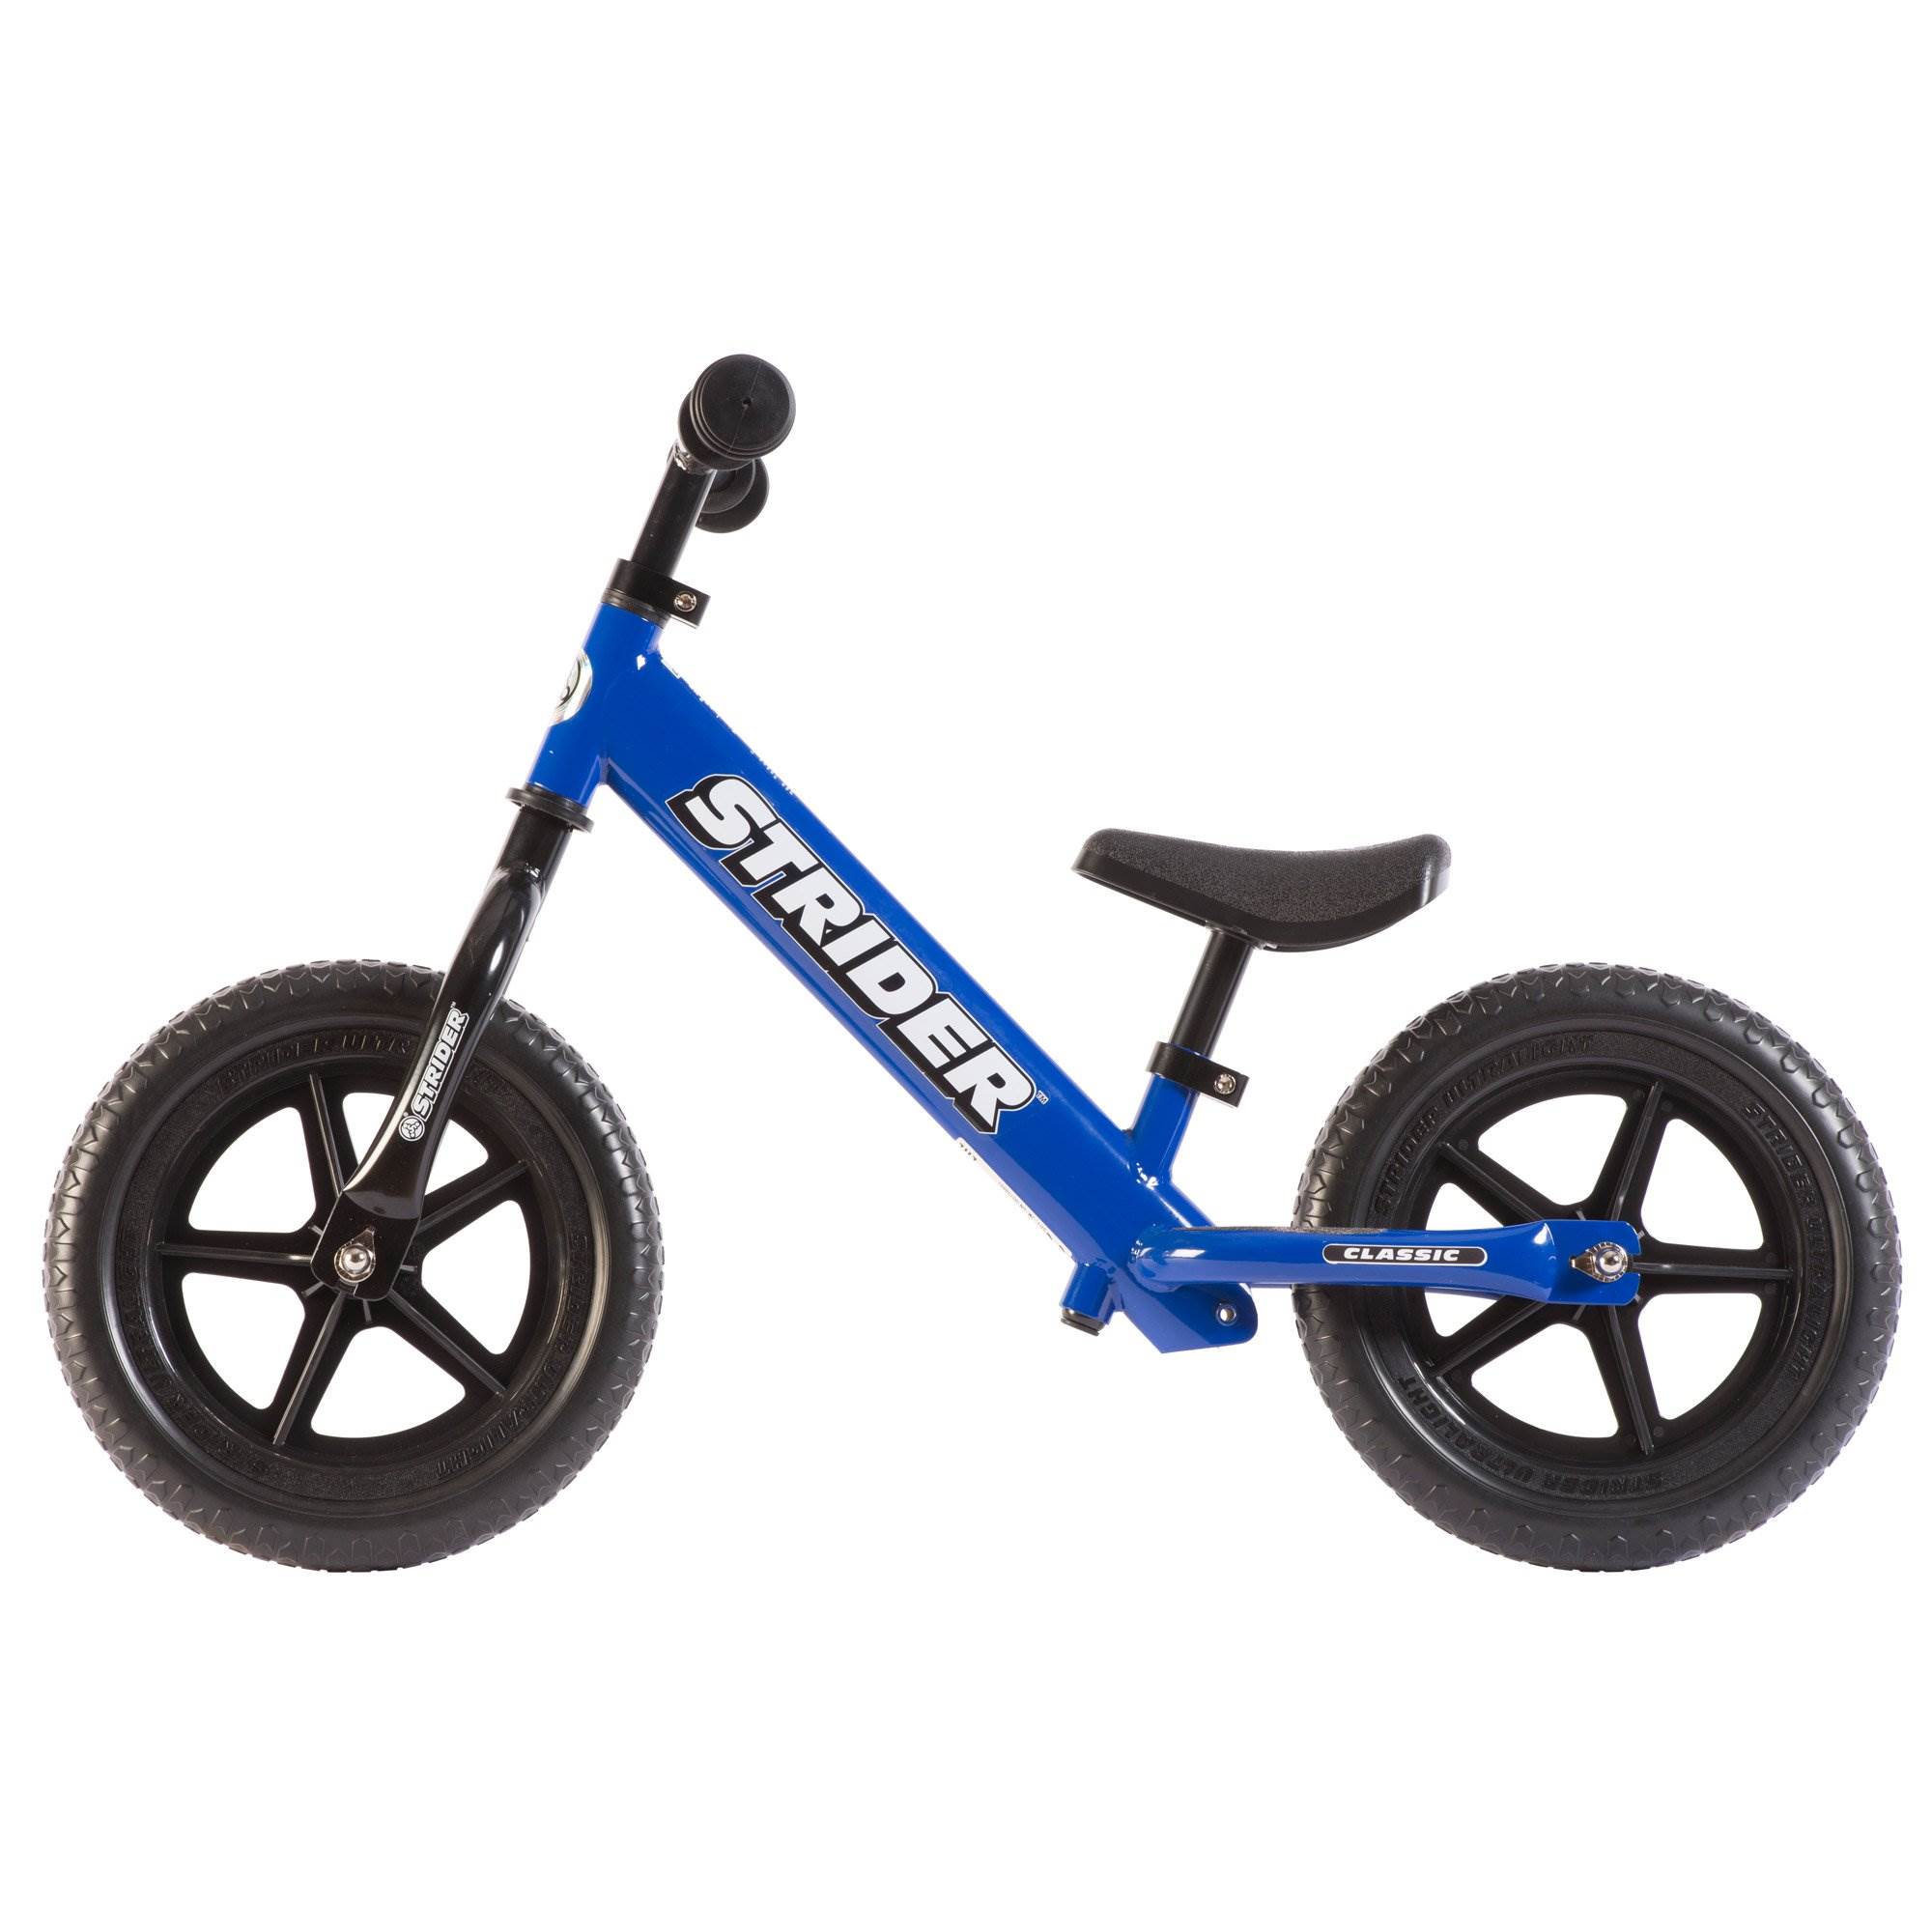 Strider Entry Balance Bike for Toddler Kids 18-36 Months, Blue (Open ... - 88284 4652781